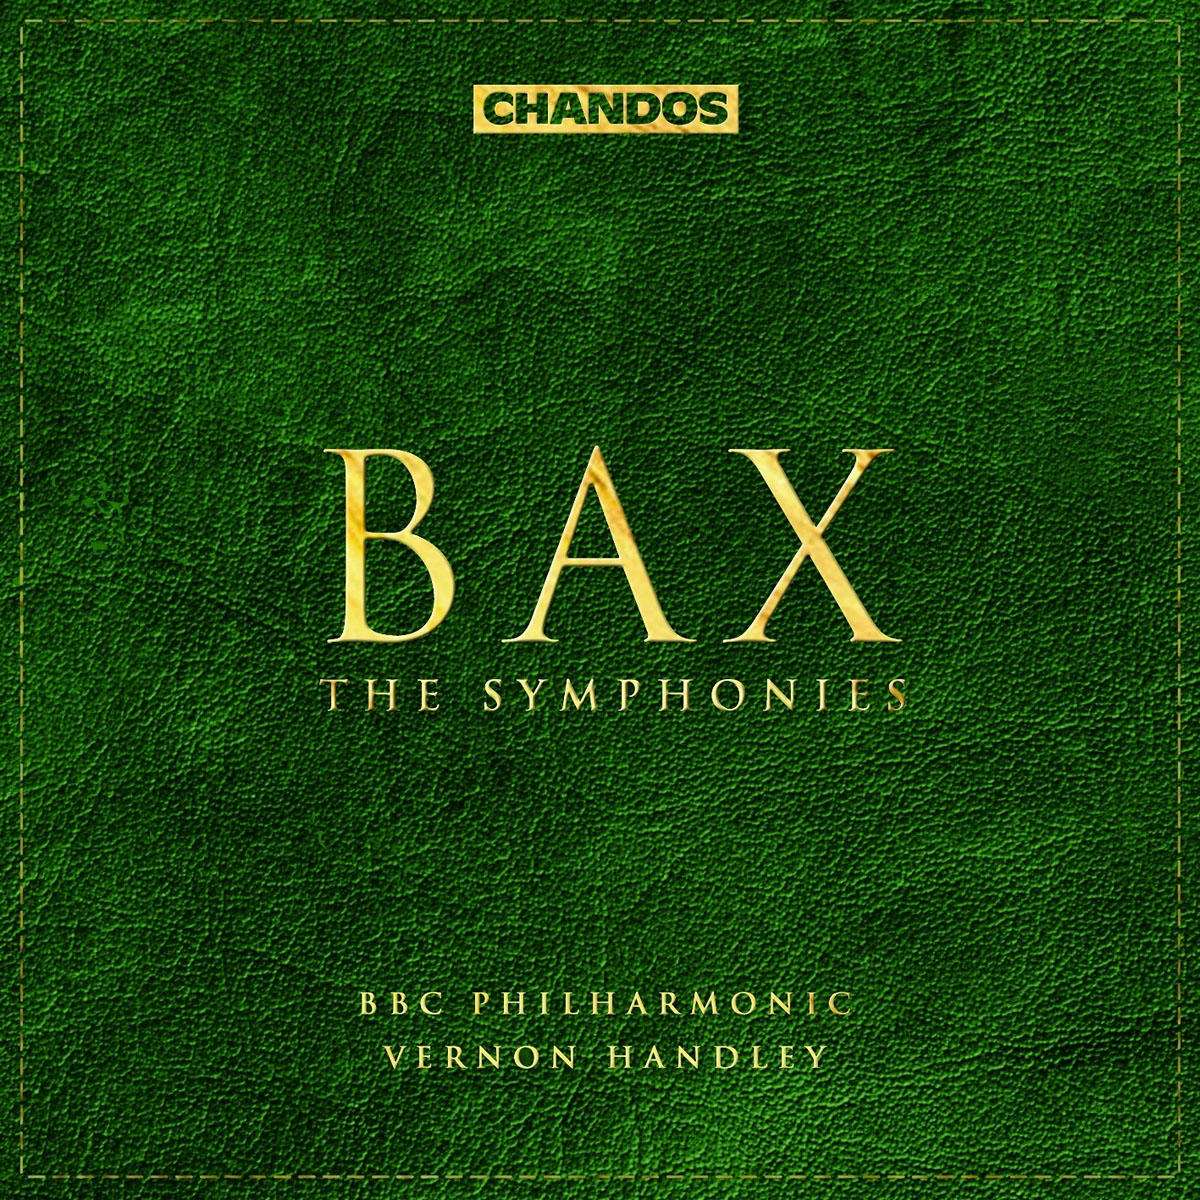 Magical Journey: Arnold Bax - Symphonies (Vernon Handley)